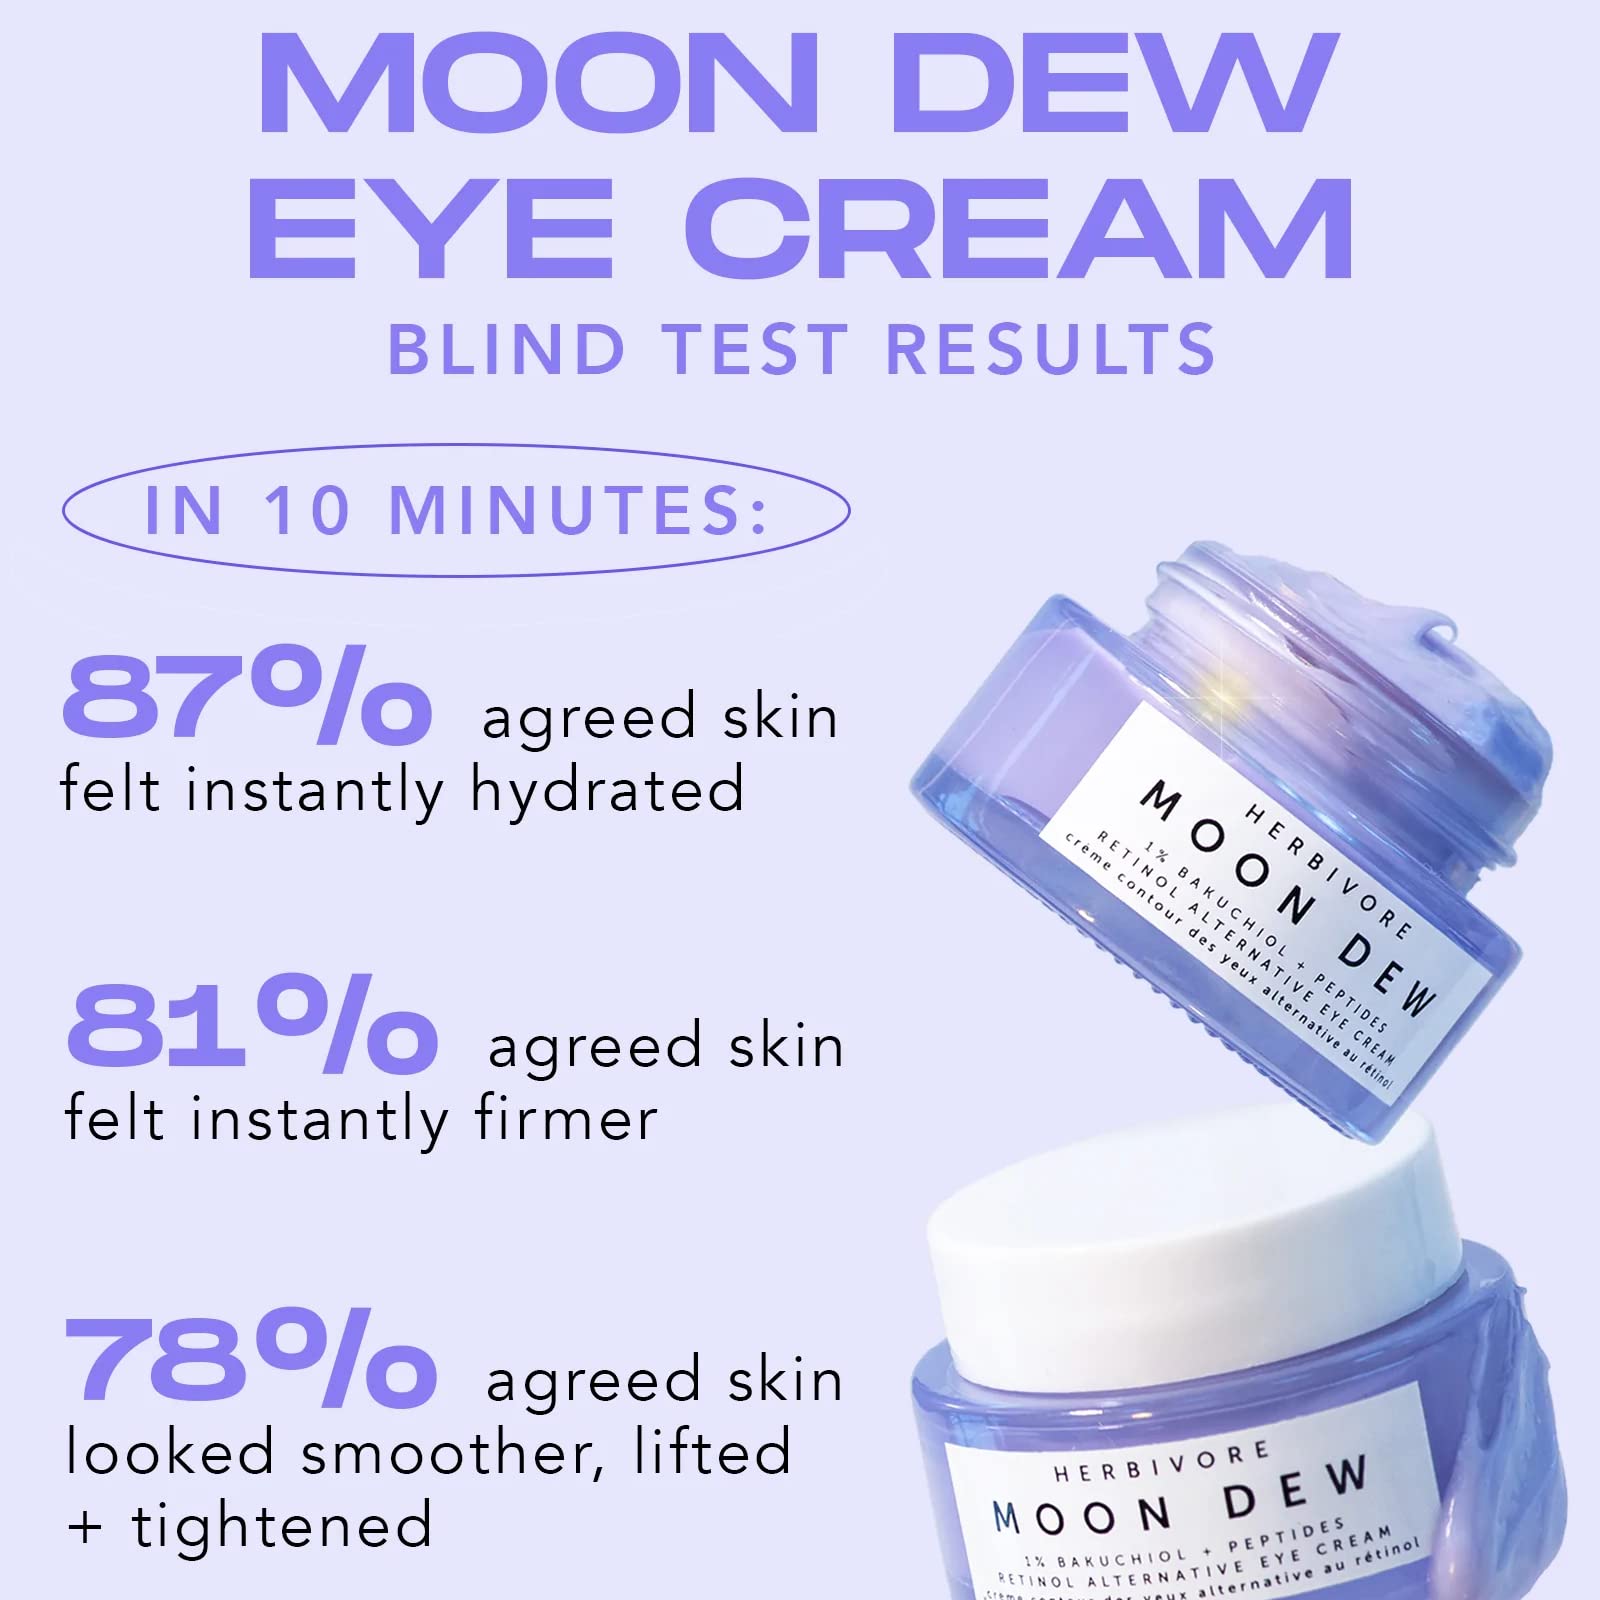 HERBIVORE Moon Dew 1% Bakuchiol + Peptides Retinol Alternative Eye Cream - Anti Aging Eye Cream Reduces Fine Lines, Wrinkles & Puffiness, Plant-based, Vegan, Cruelty-free, 15mL / 0.5 oz